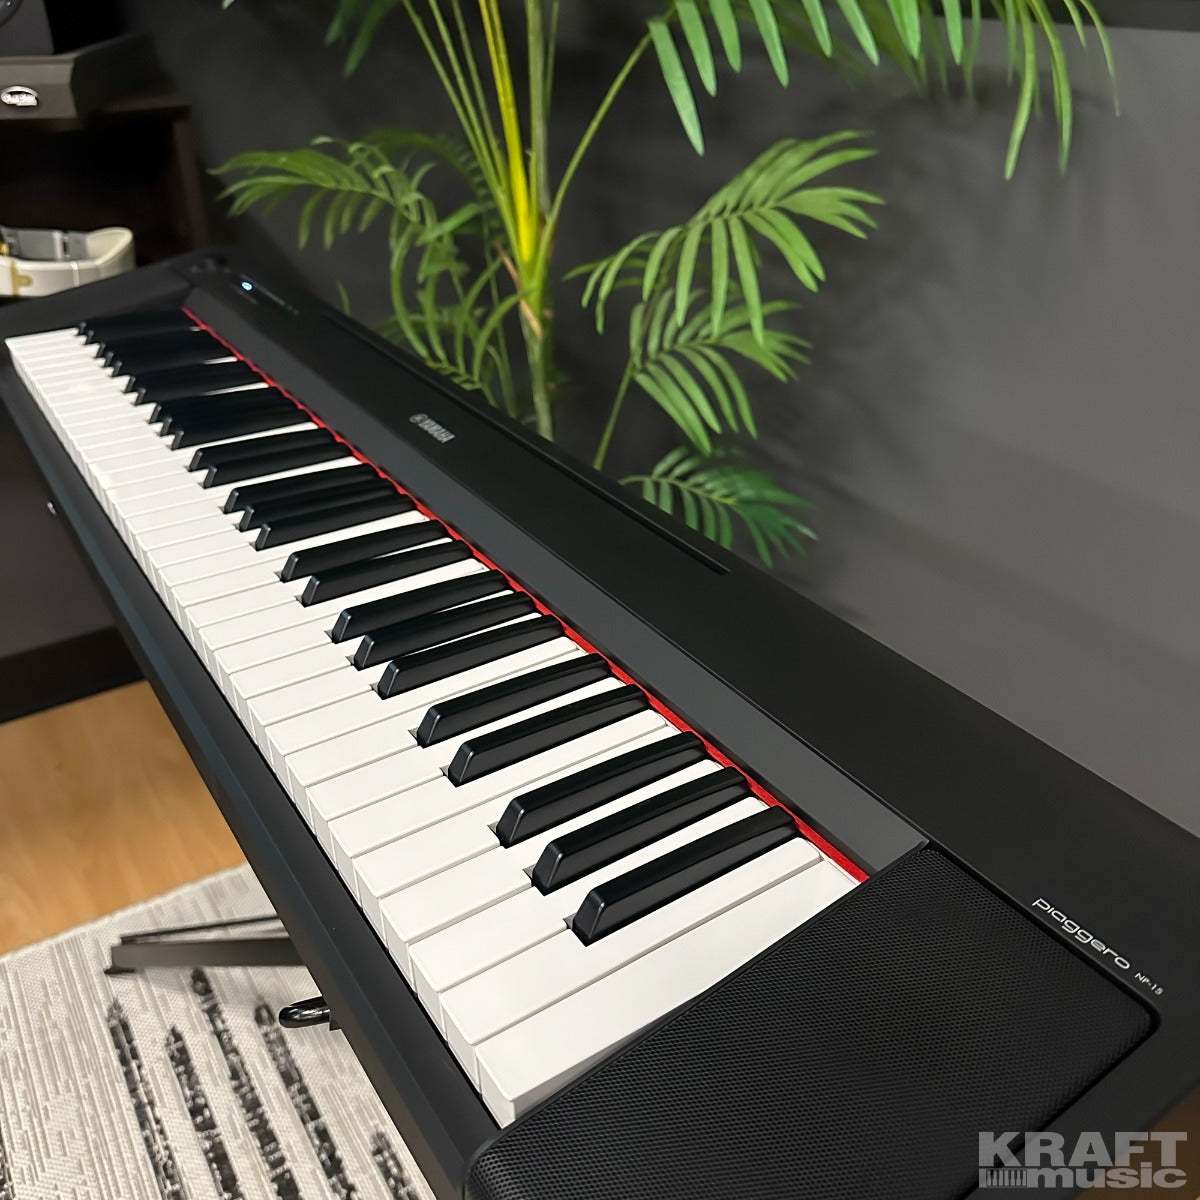 Yamaha Piaggero NP-15 61-Key Portable Keyboard - Black BONUS PAK